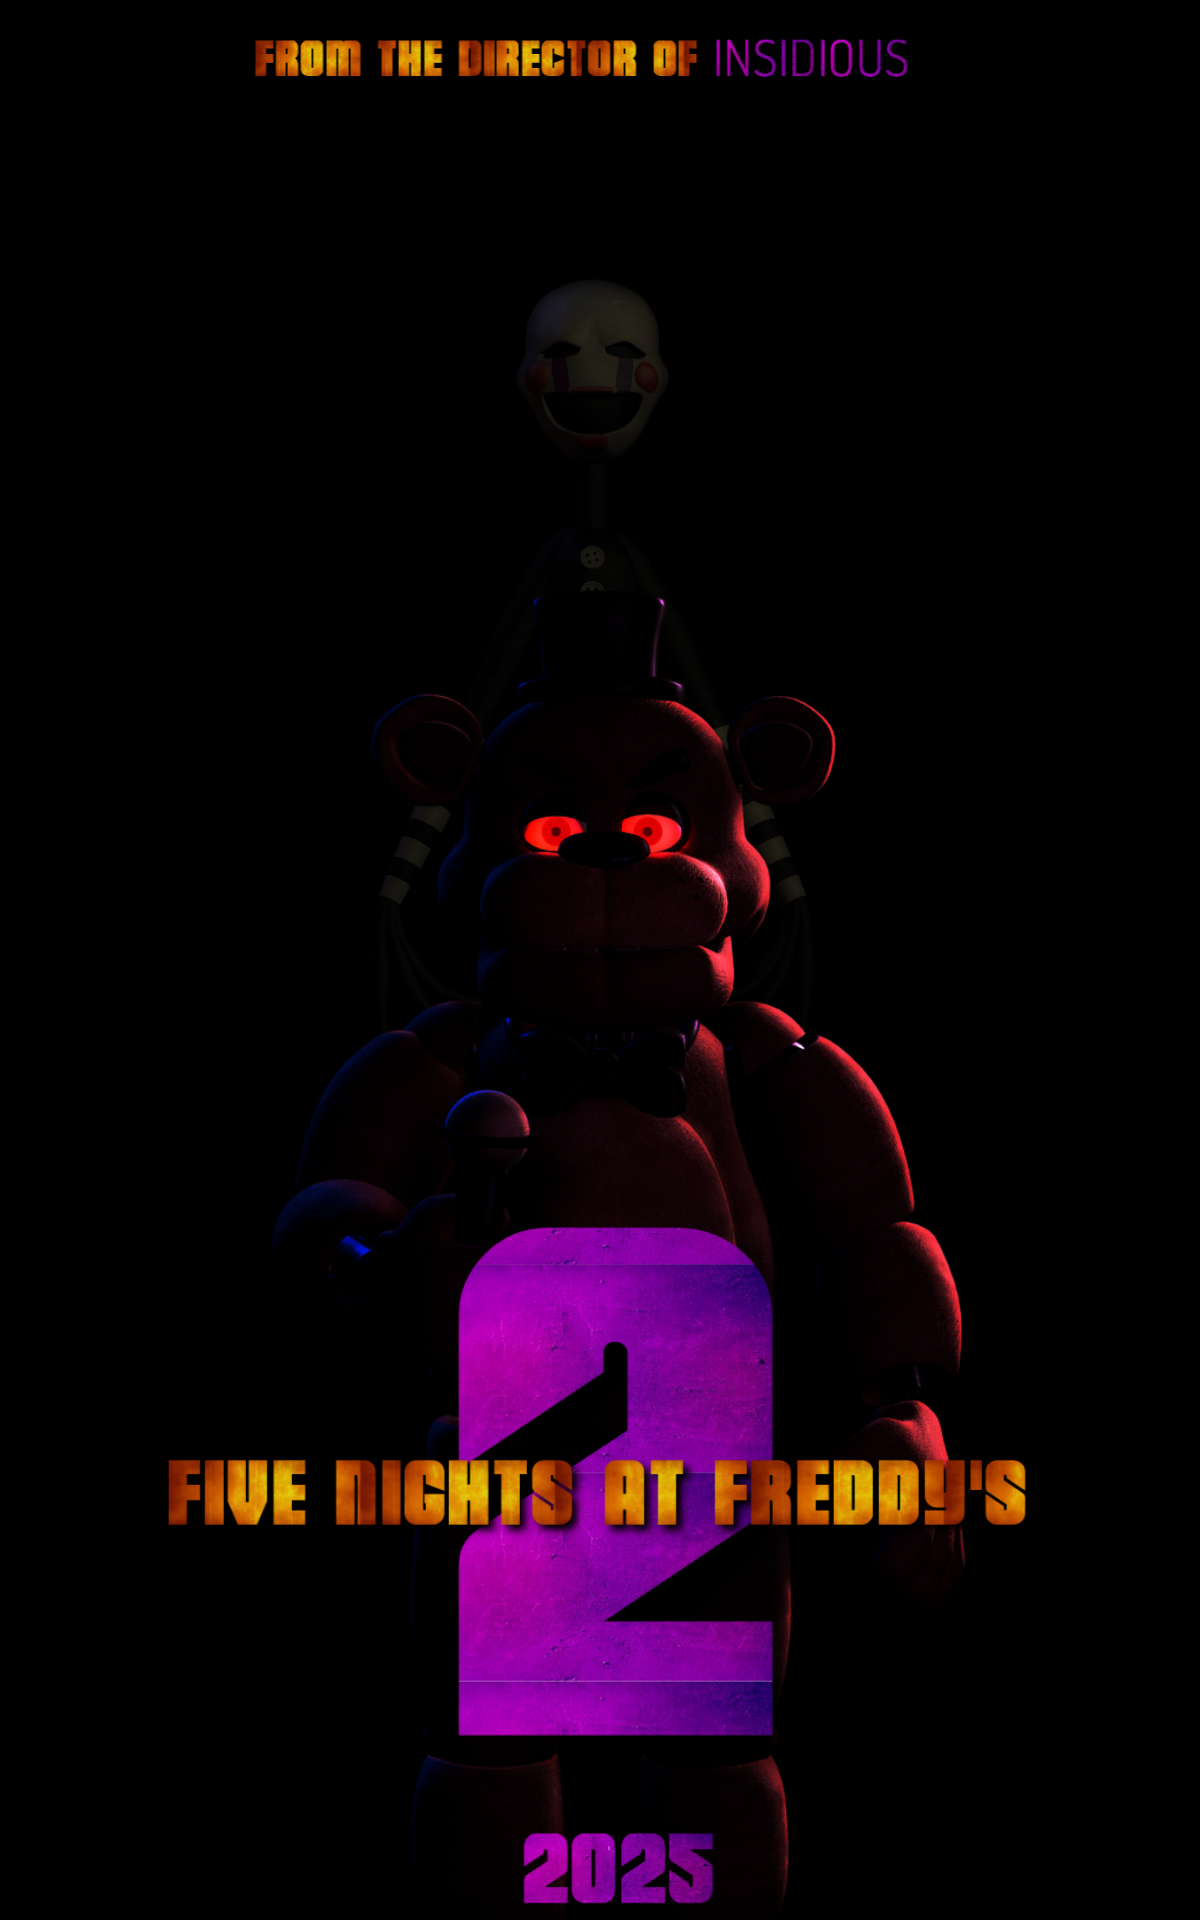 FNAF Movie 2 Freddy Poster by gcjdfkjbrfguithgiuht on DeviantArt